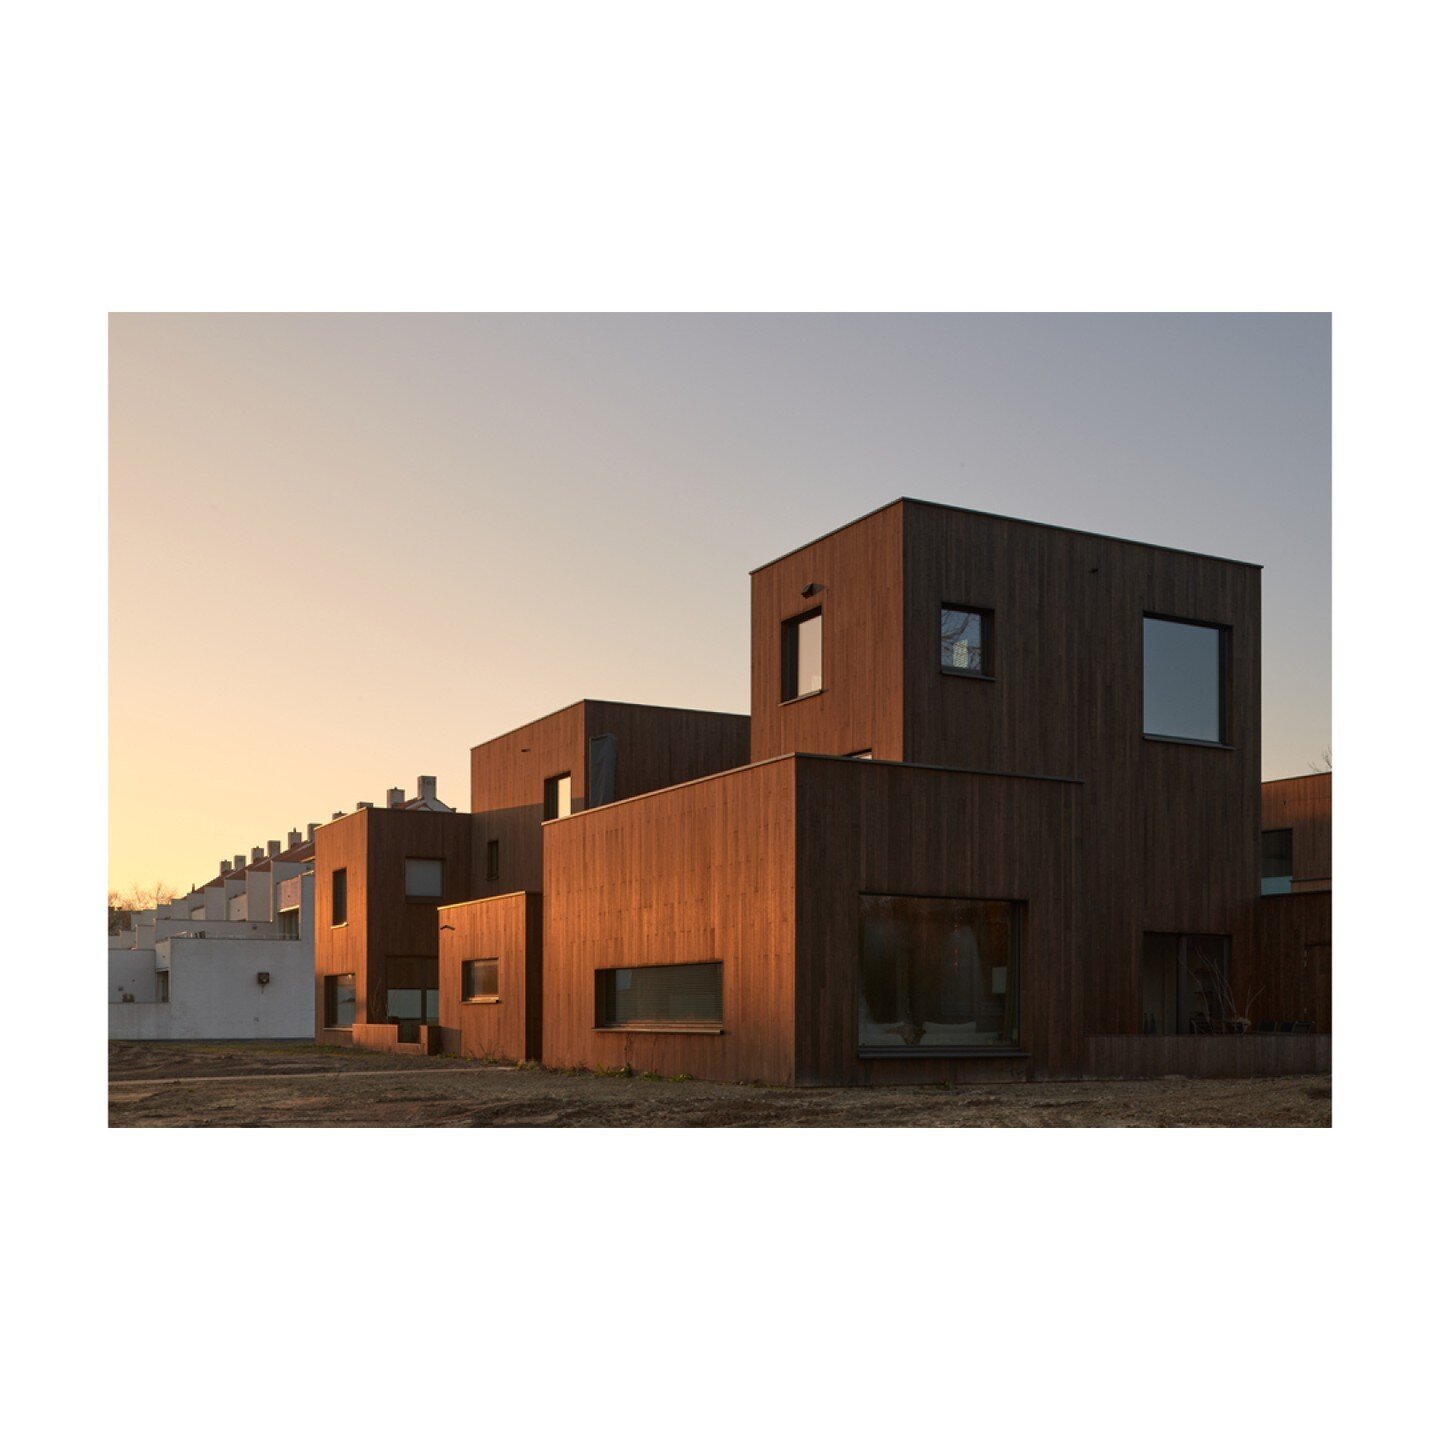 February 2023, Bosrijk, shot for @marcellok_architect
.
.
.
.
#architecture #photography #architecturephotography  #wood #building #arch #column #concrete #plywood #hardwood #sunset #evening #goldenhour #windows